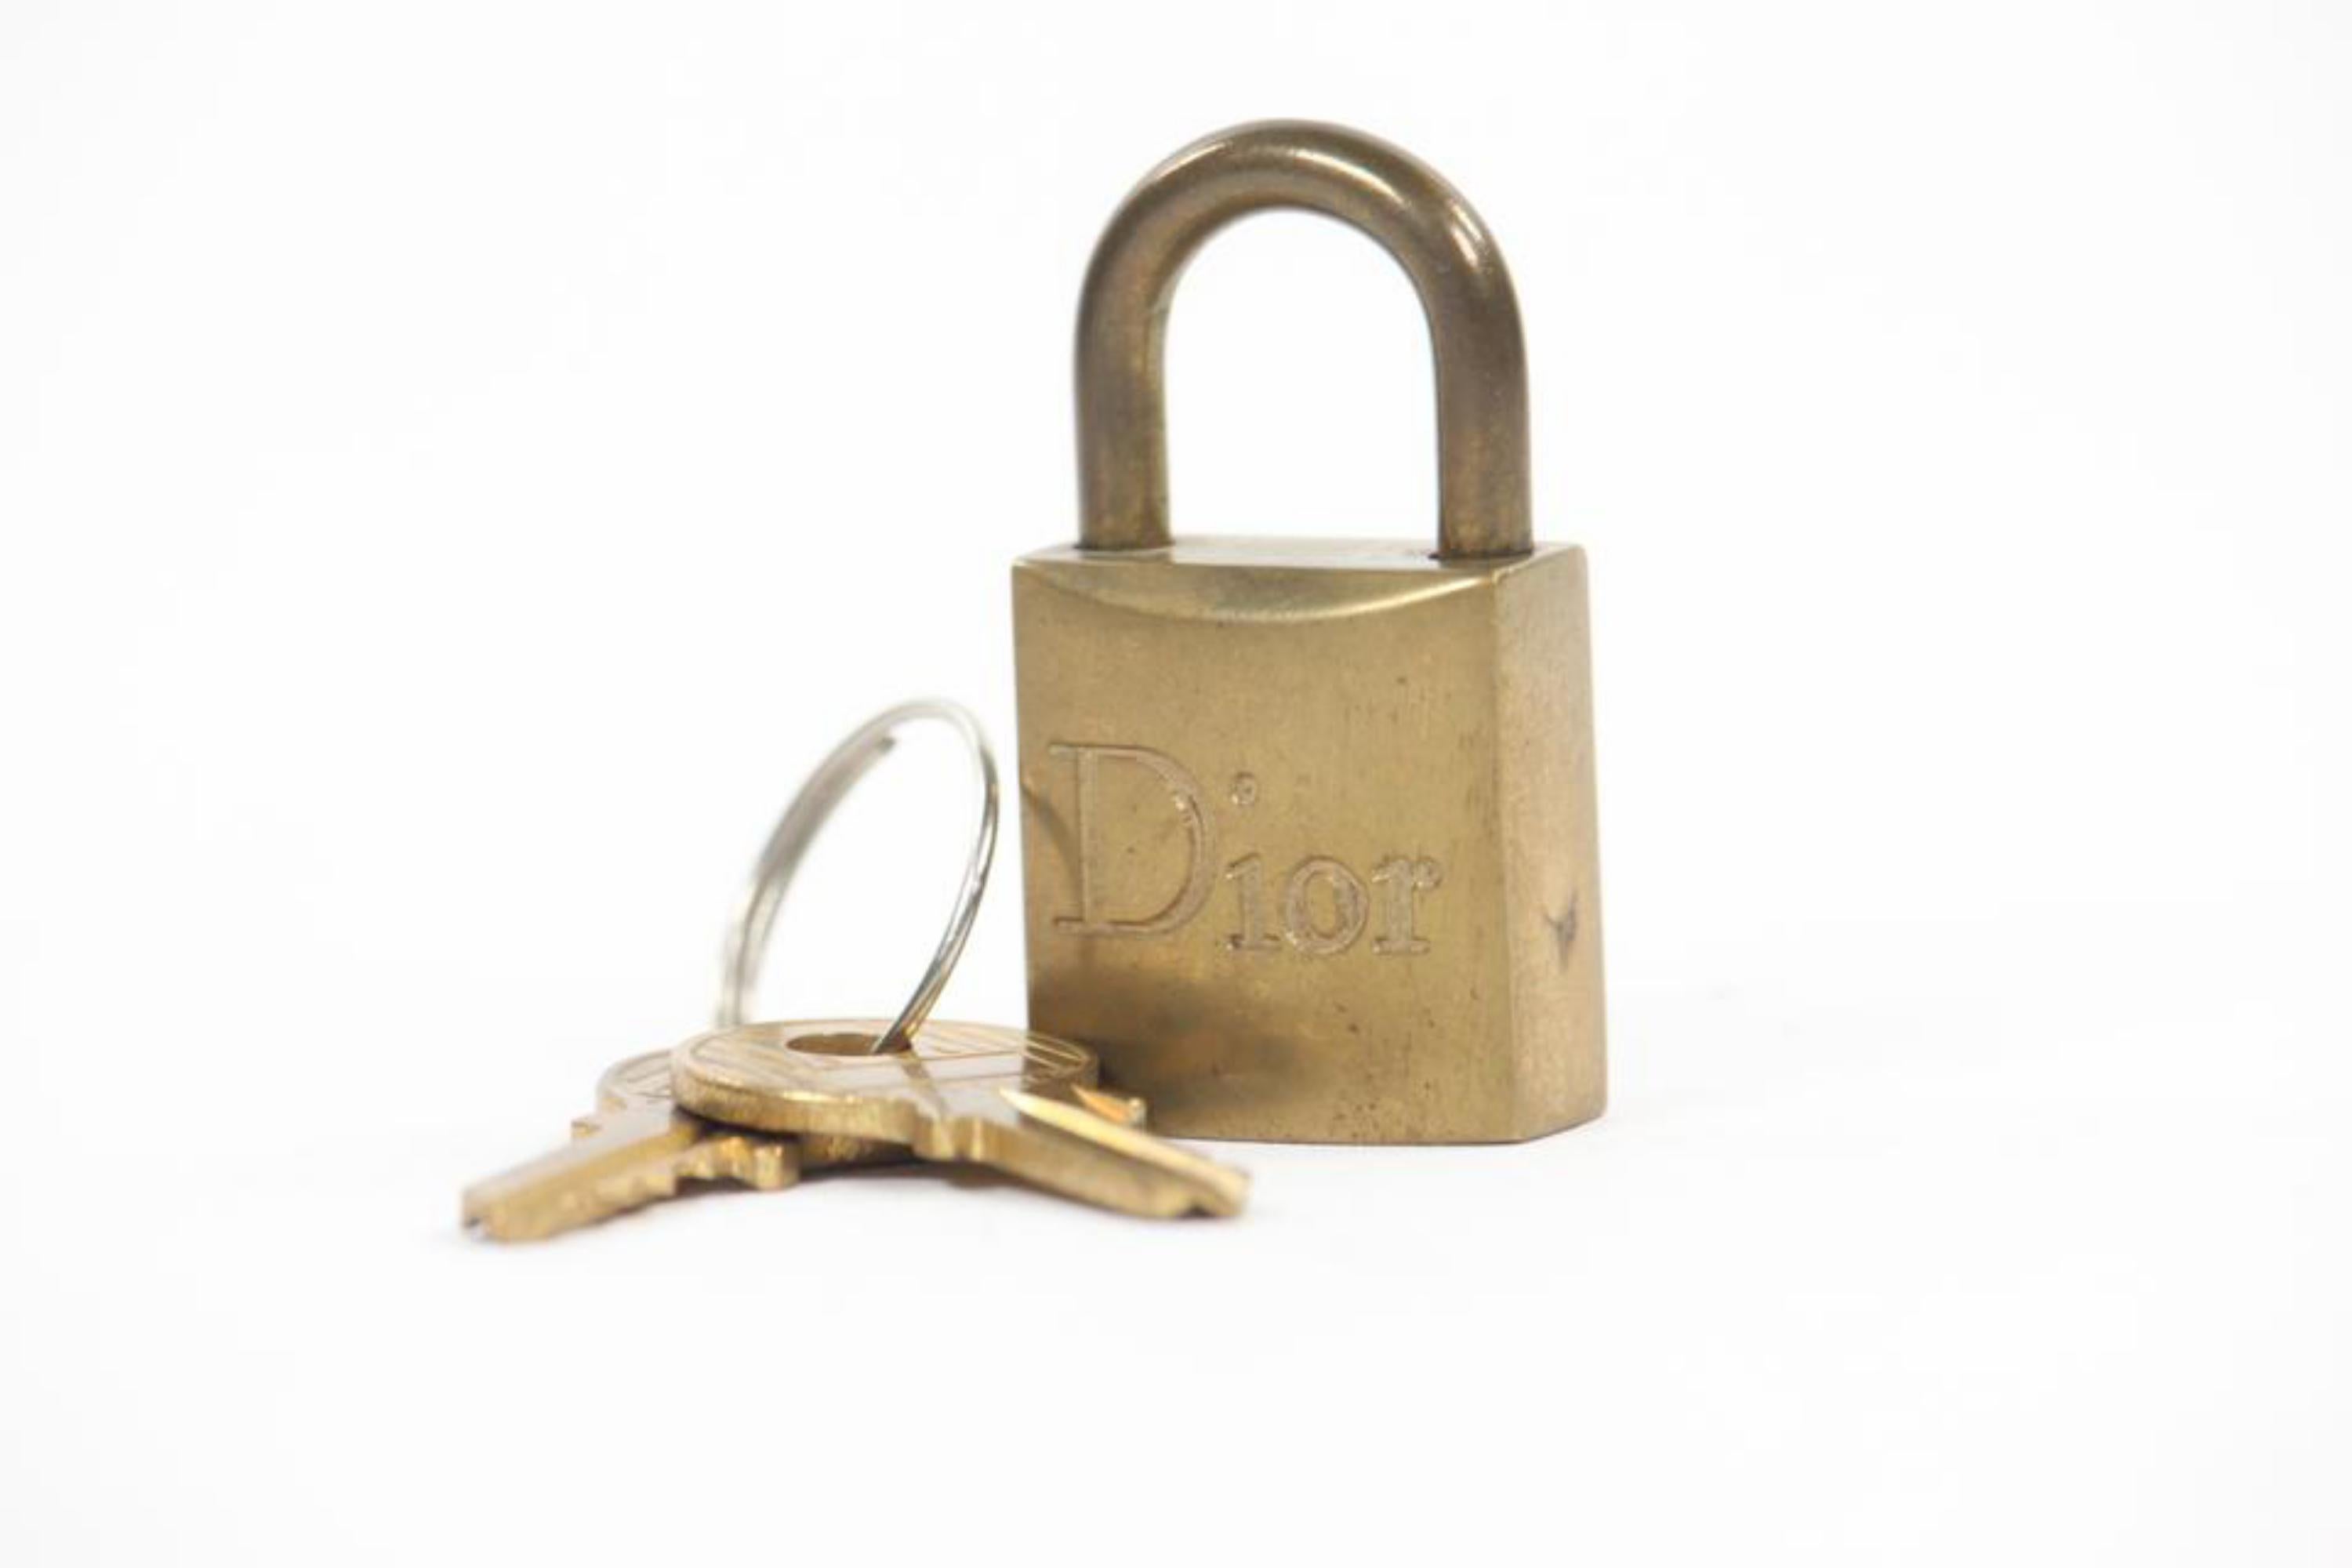 Dior Brass Logo Padlock and Key Bag Charm Lock Set 3DR1104 For Sale 1